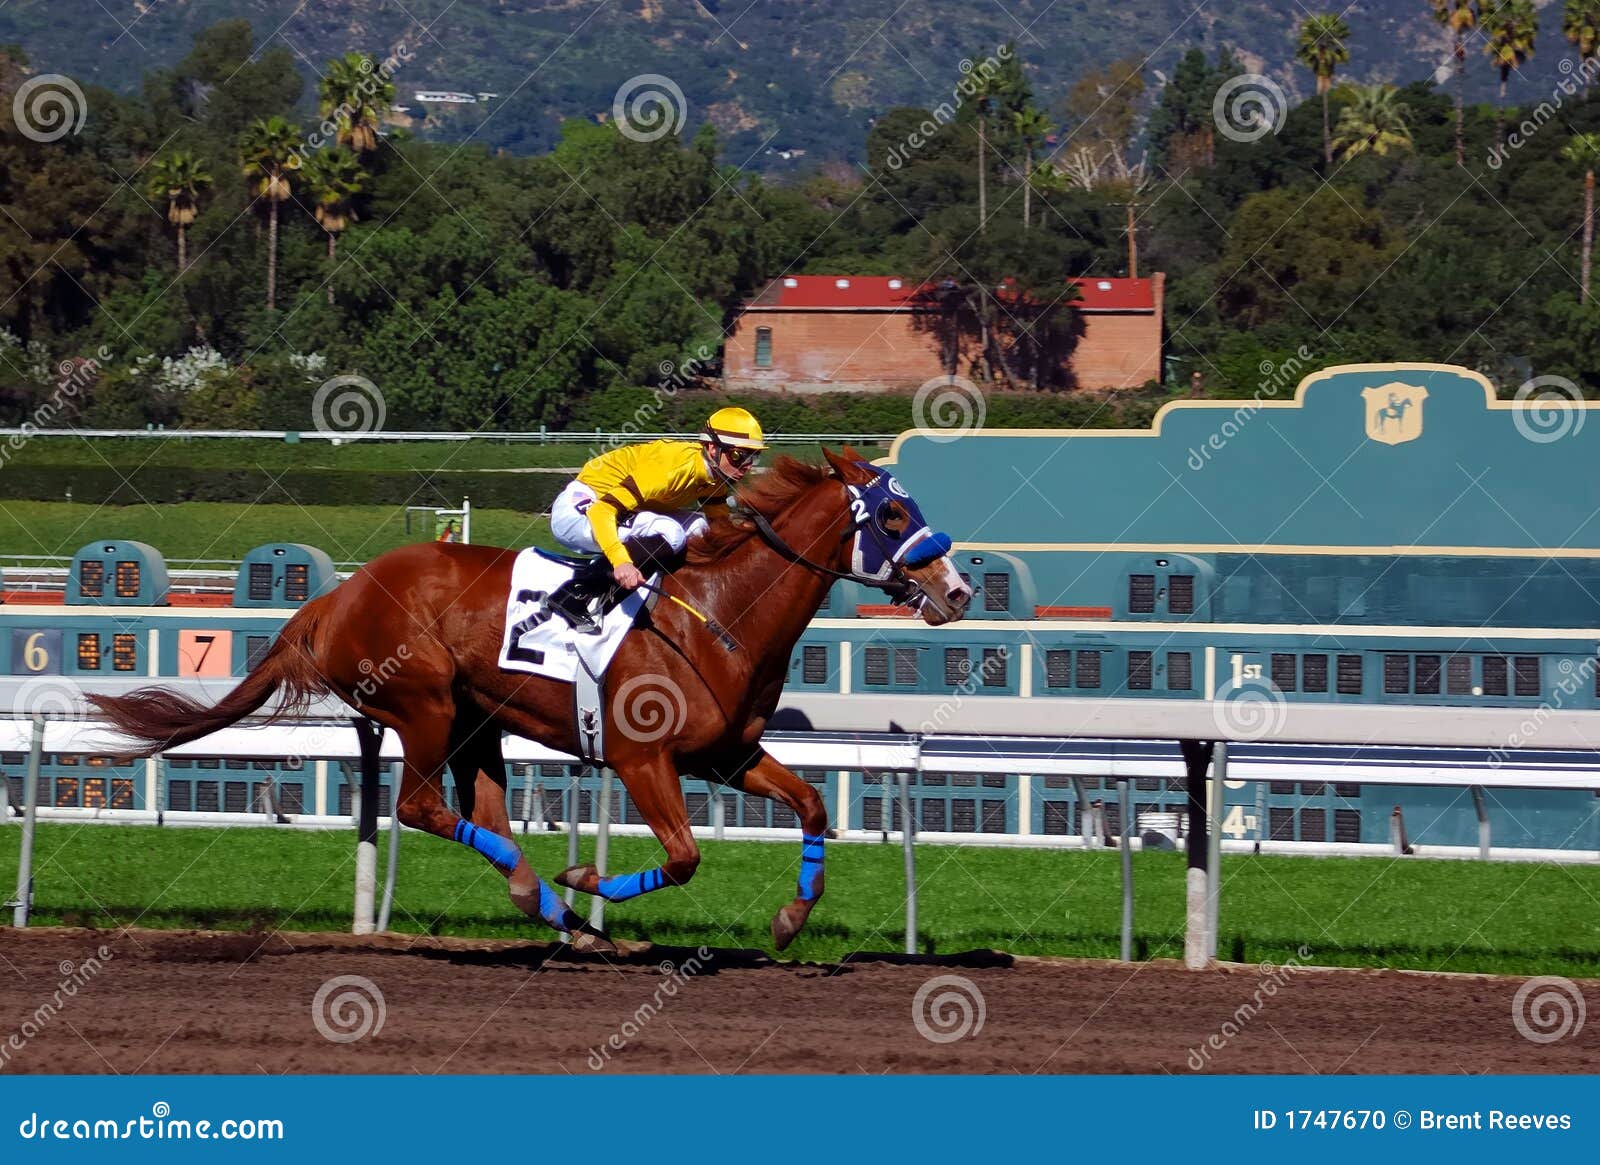 thoroughbred horse racing